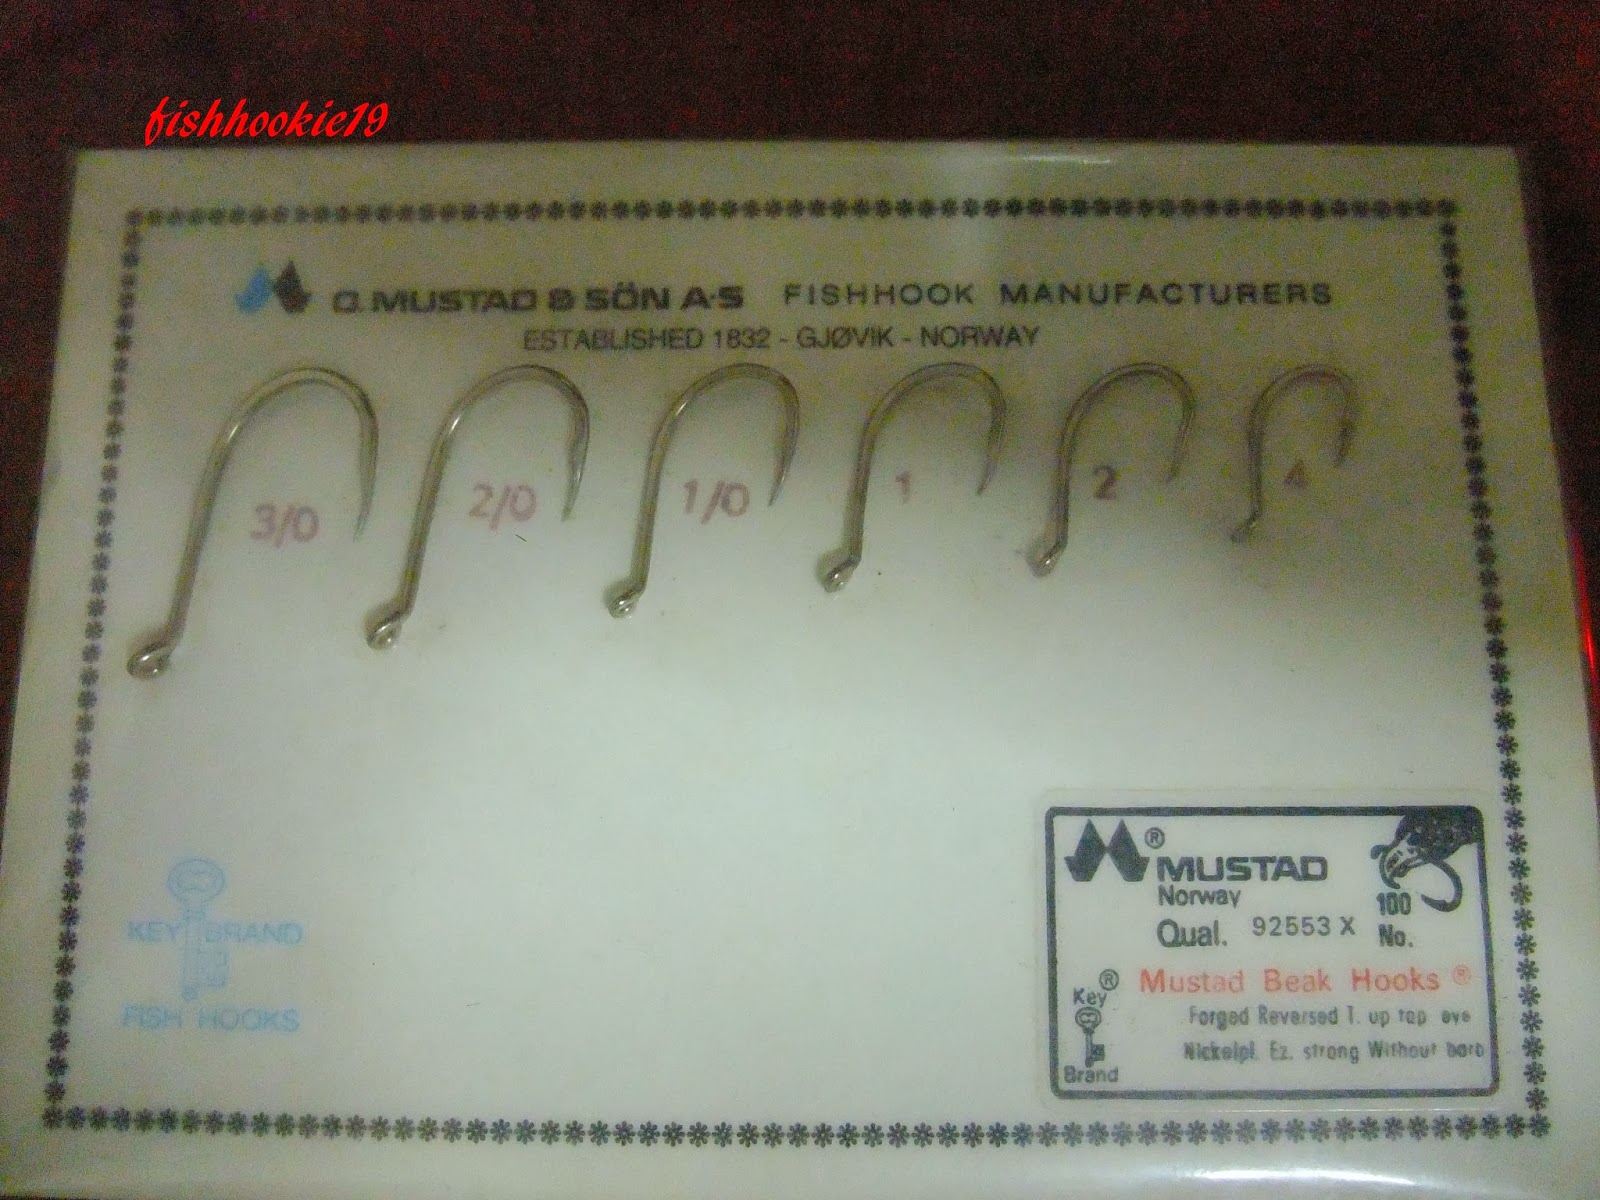 old-mustad-brand-s-fish-hooks-sample-size-chart-model-9255-x-mustad-beak-hooks